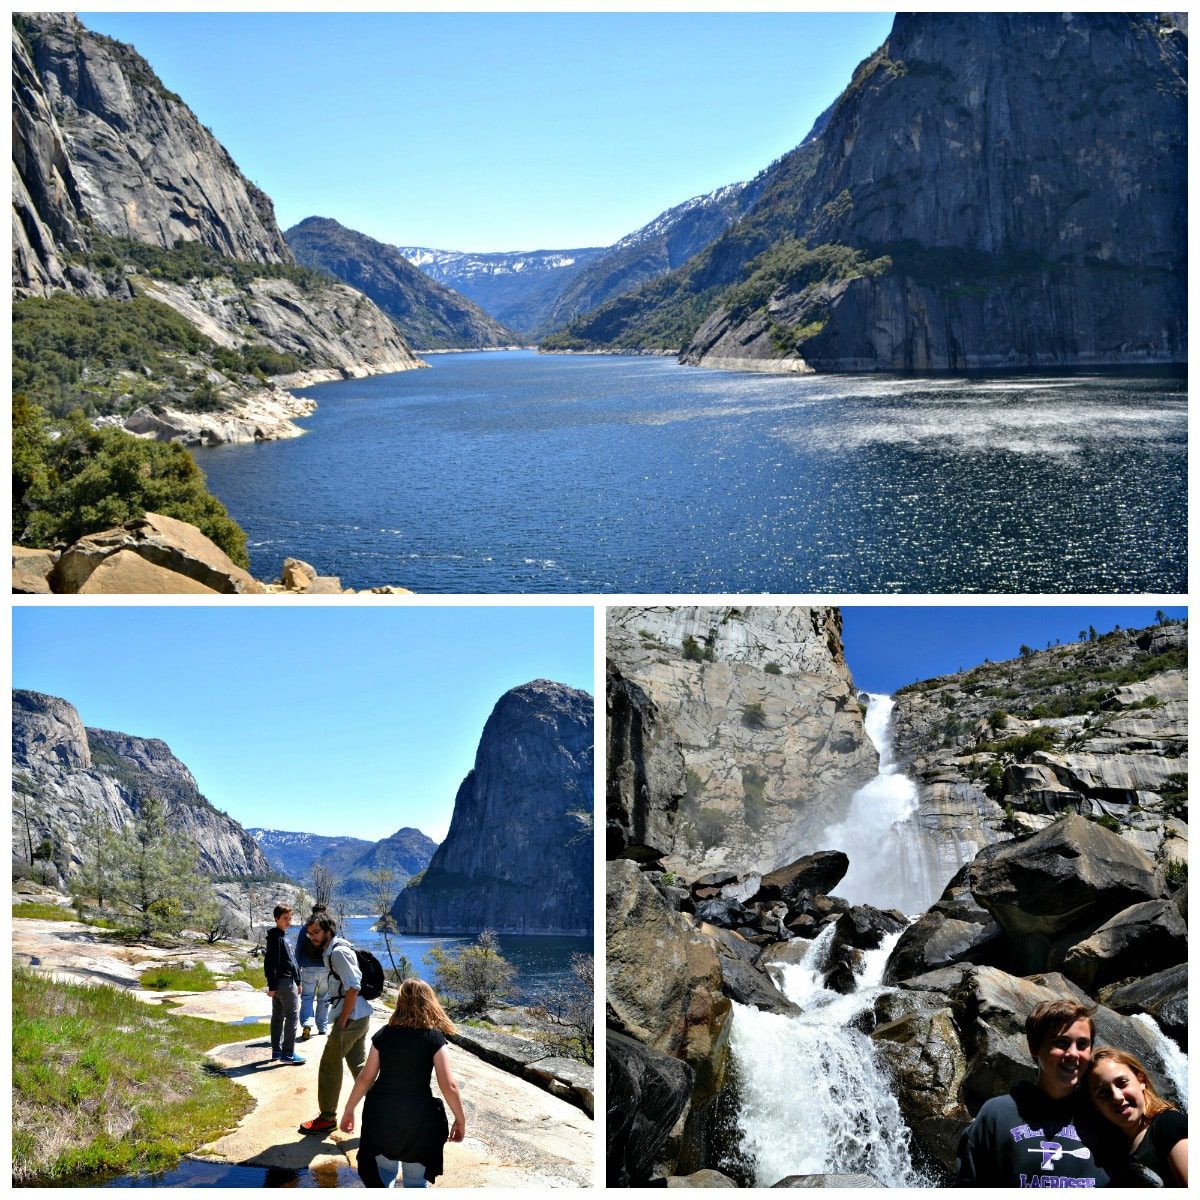 A beautiful half-day hike to Wapama Falls in the Hetch Hetchy area of Yosemite